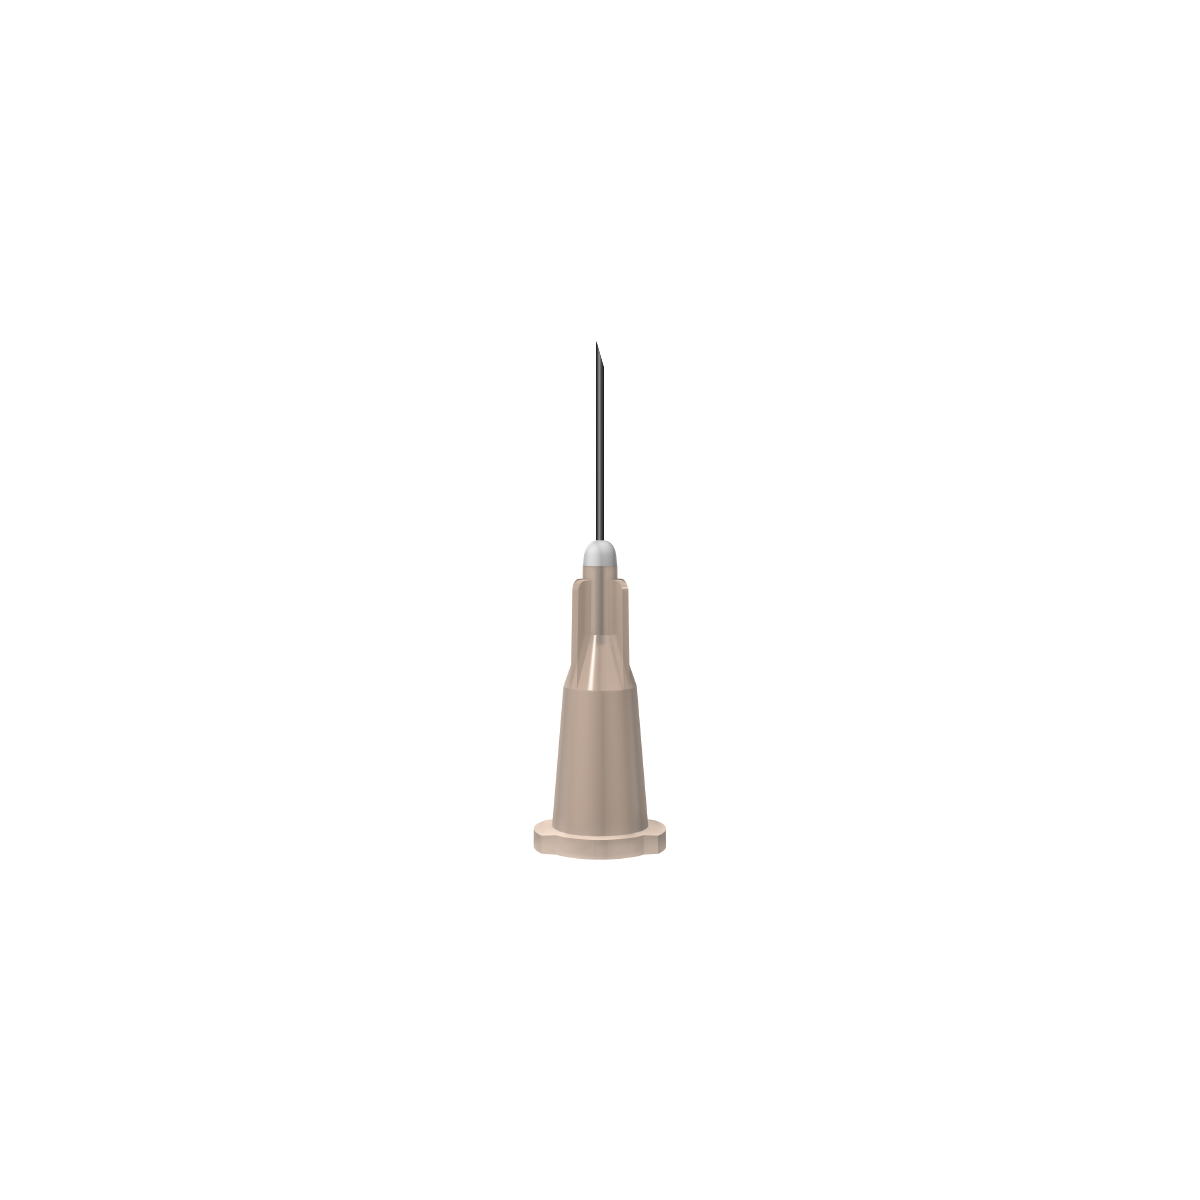 BBraun: Brown 26G 12mm (½ inch) needle